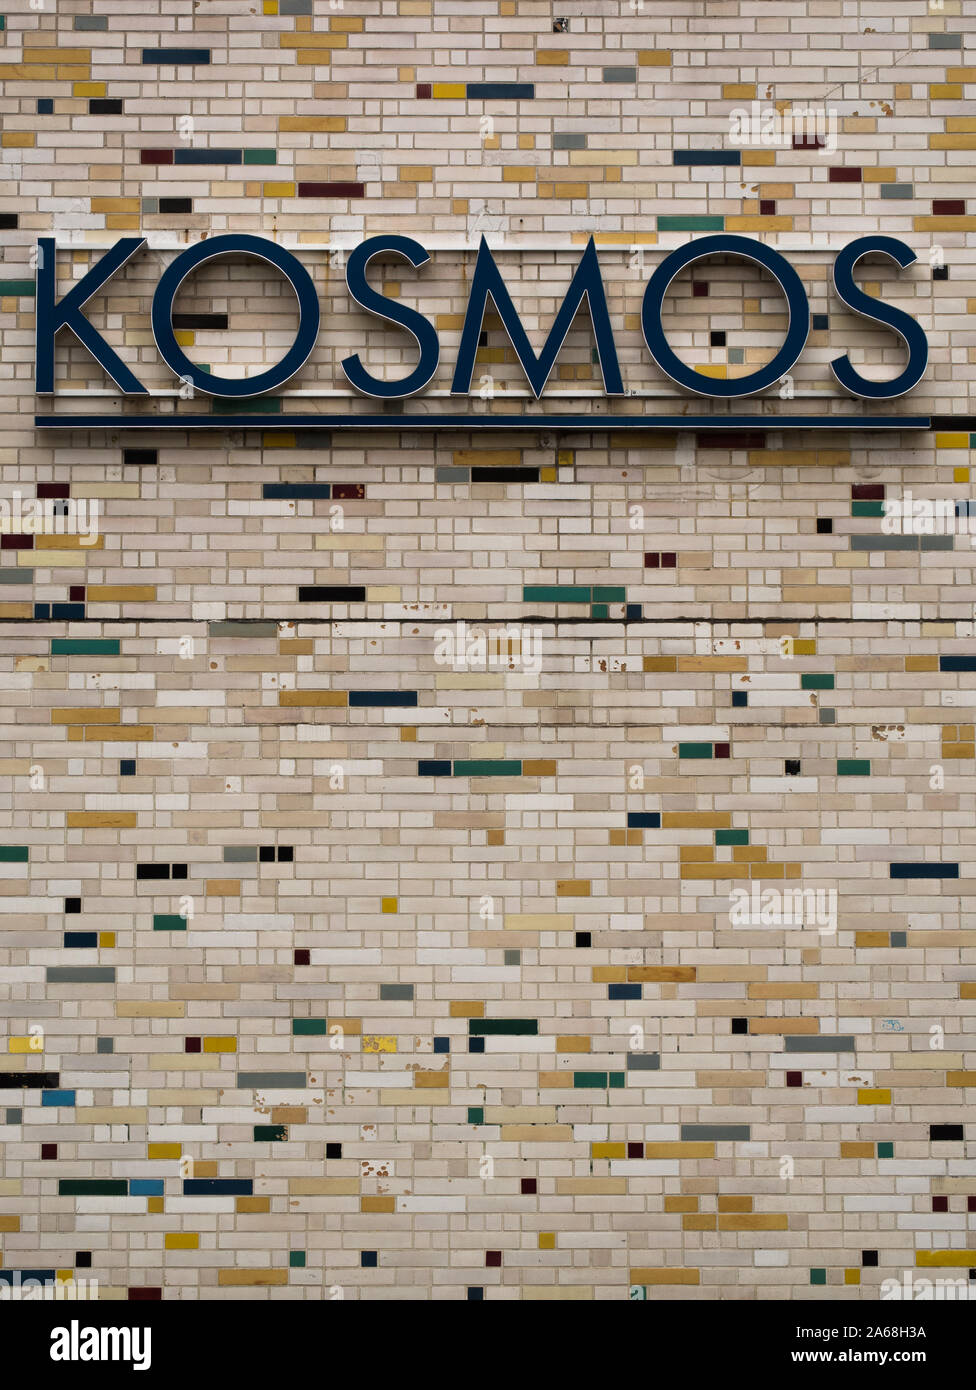 Berlin/Germany - 07/09/2019: Former large cinema Kosmos in Friedrichshain, Berlin, Germany, front view Stock Photo